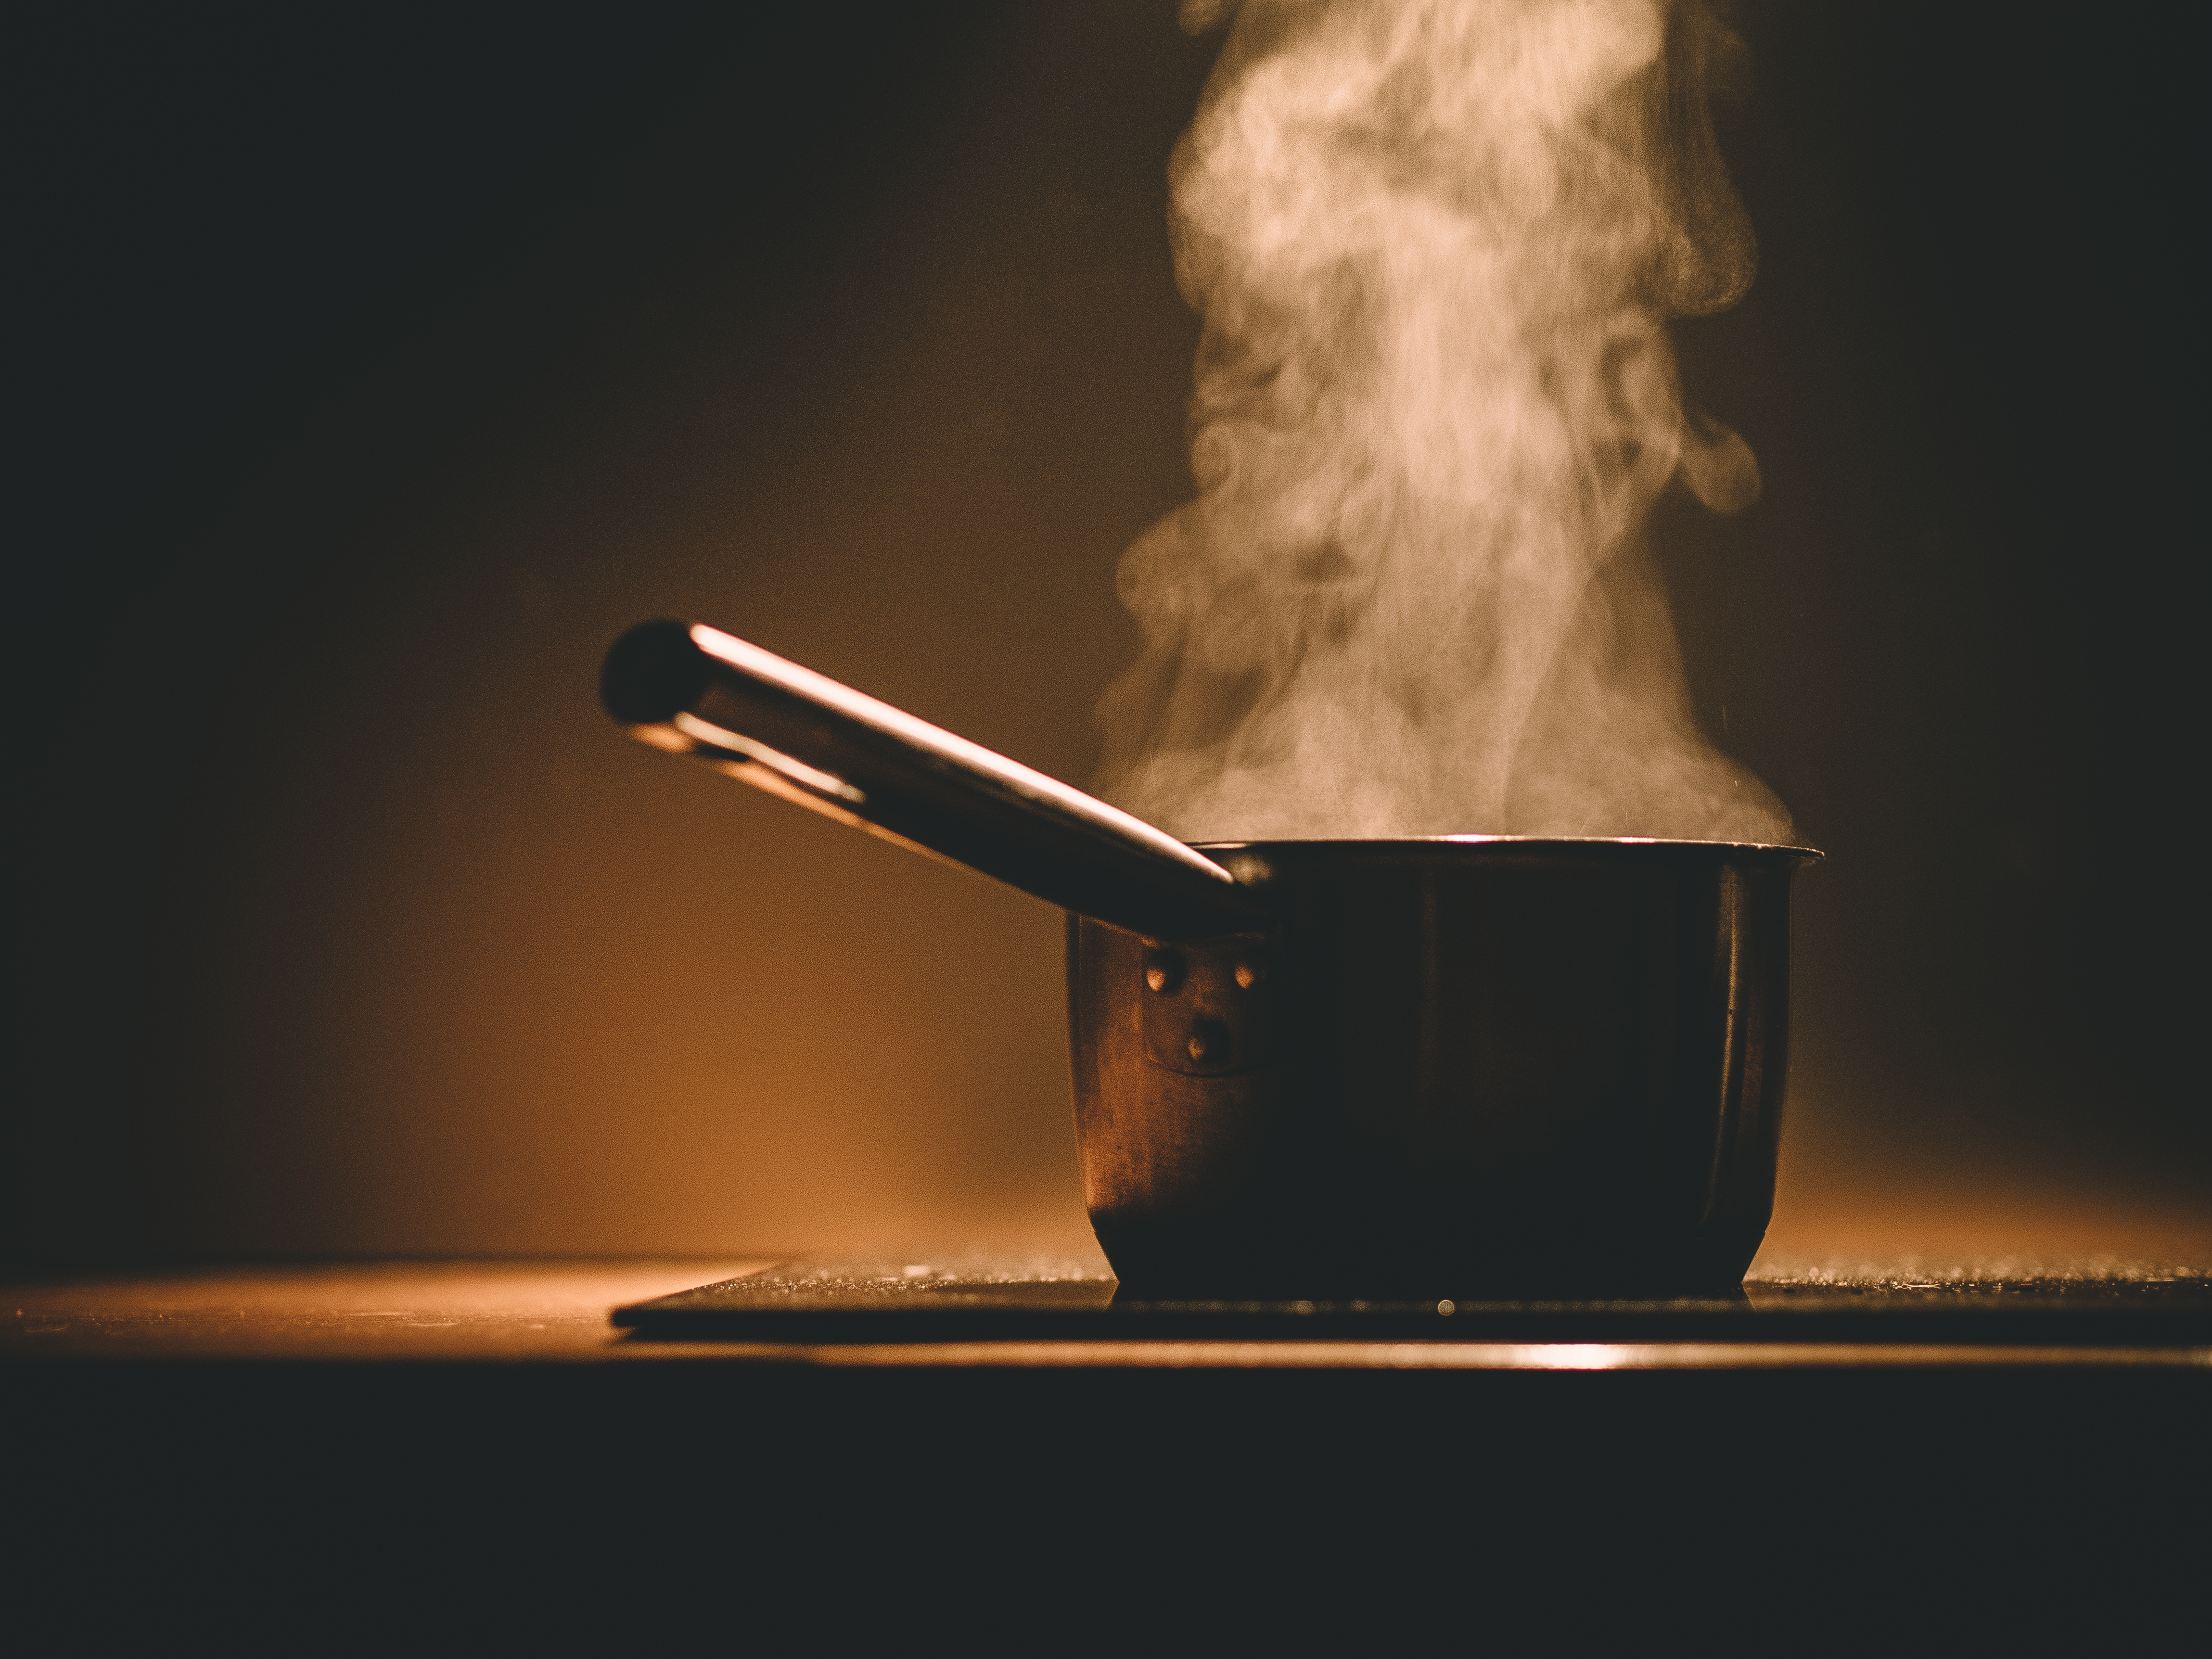 light-steam-pot-smoke-food-cooking-917756-pxhere.com